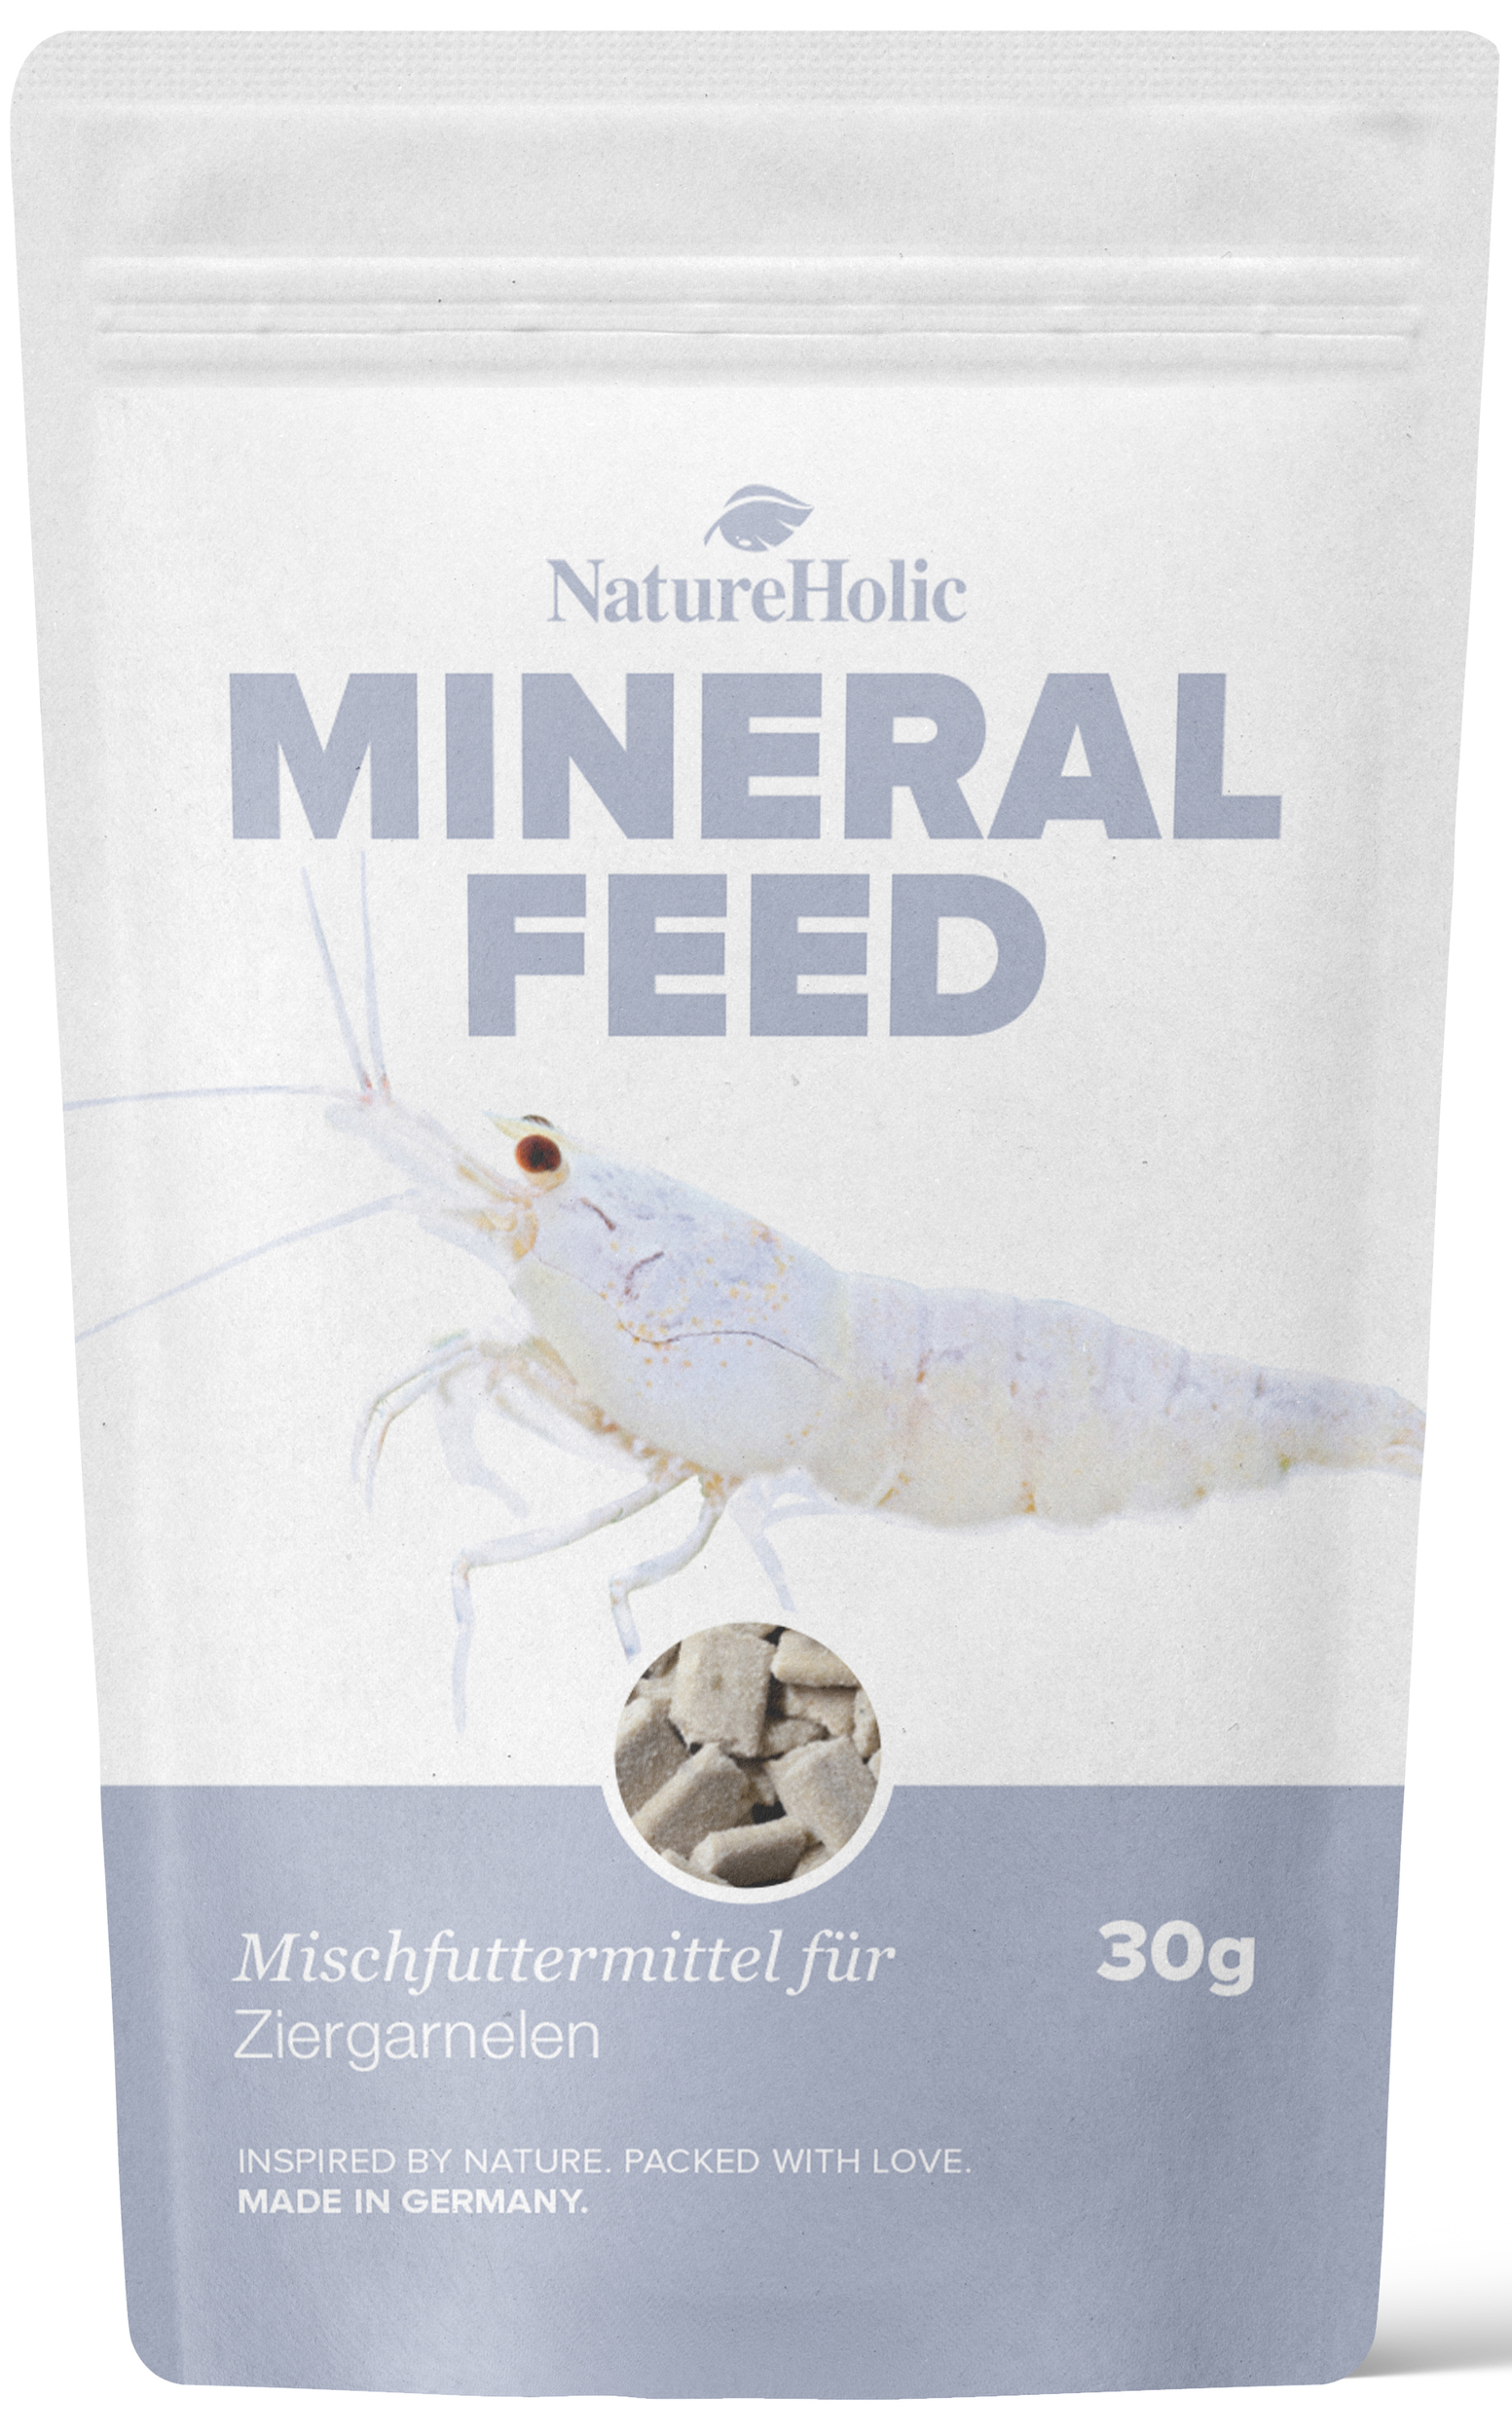 NatureHolic - Mineralfeed Garnelenfutter - 30g